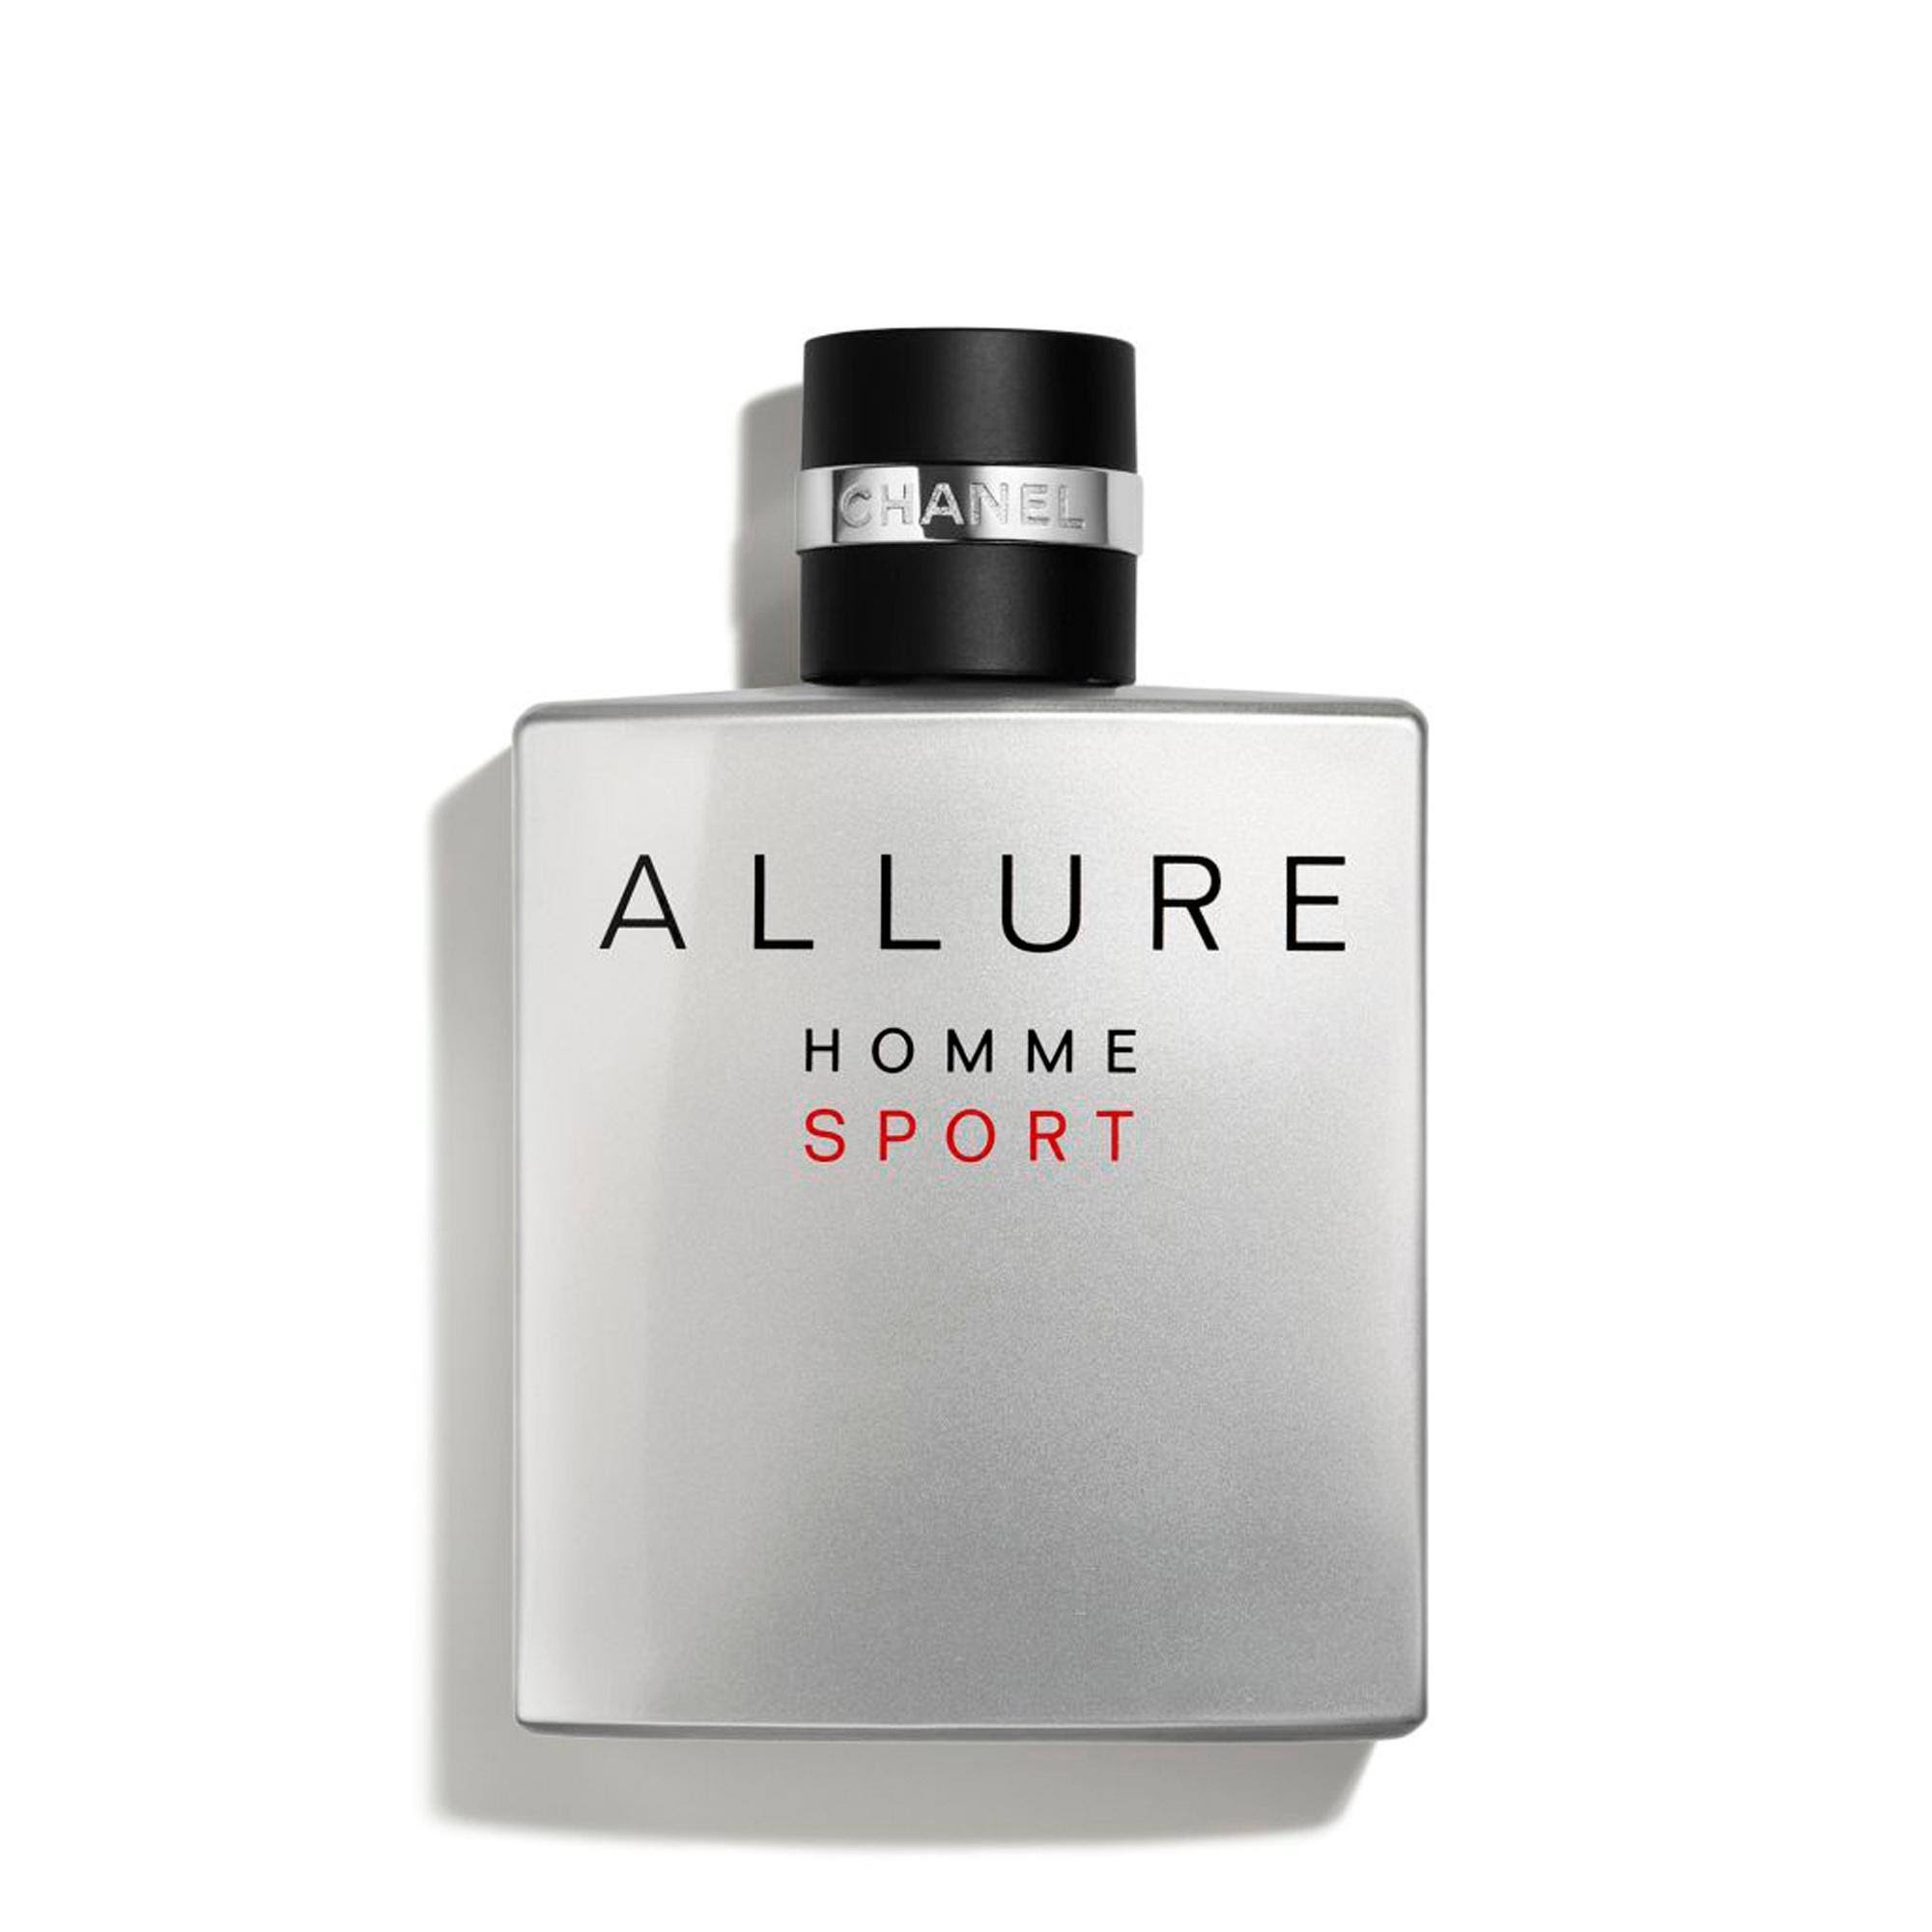 Chanel Allure Homme Sport for Men Eau de Toilette Spray - 100ml